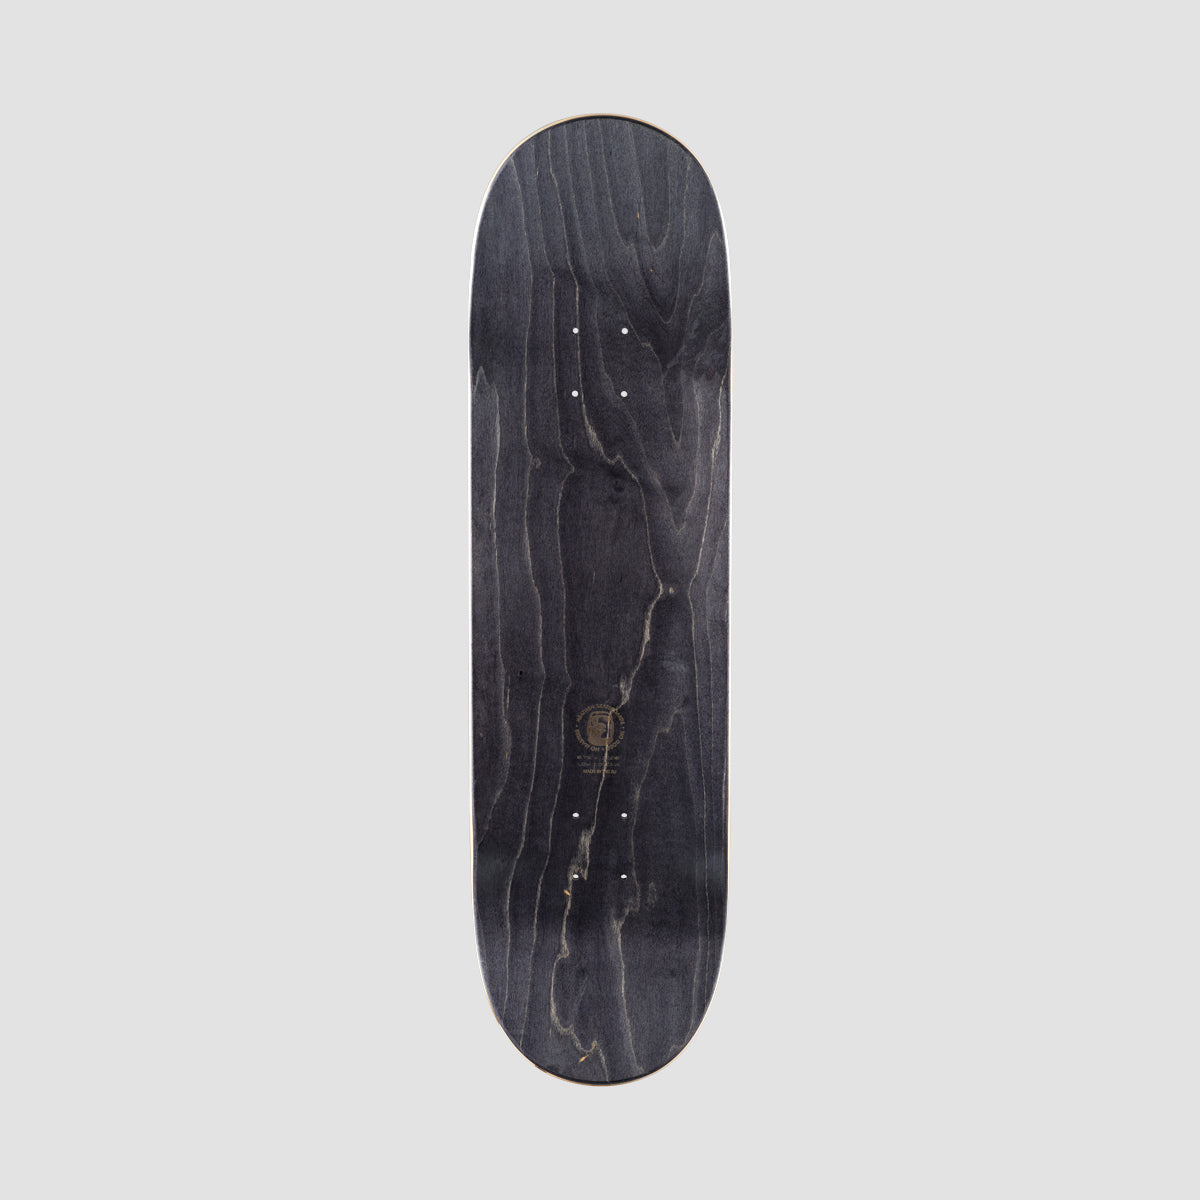 Heathen Monolith Skateboard Deck Yellow Stain - 8.25"